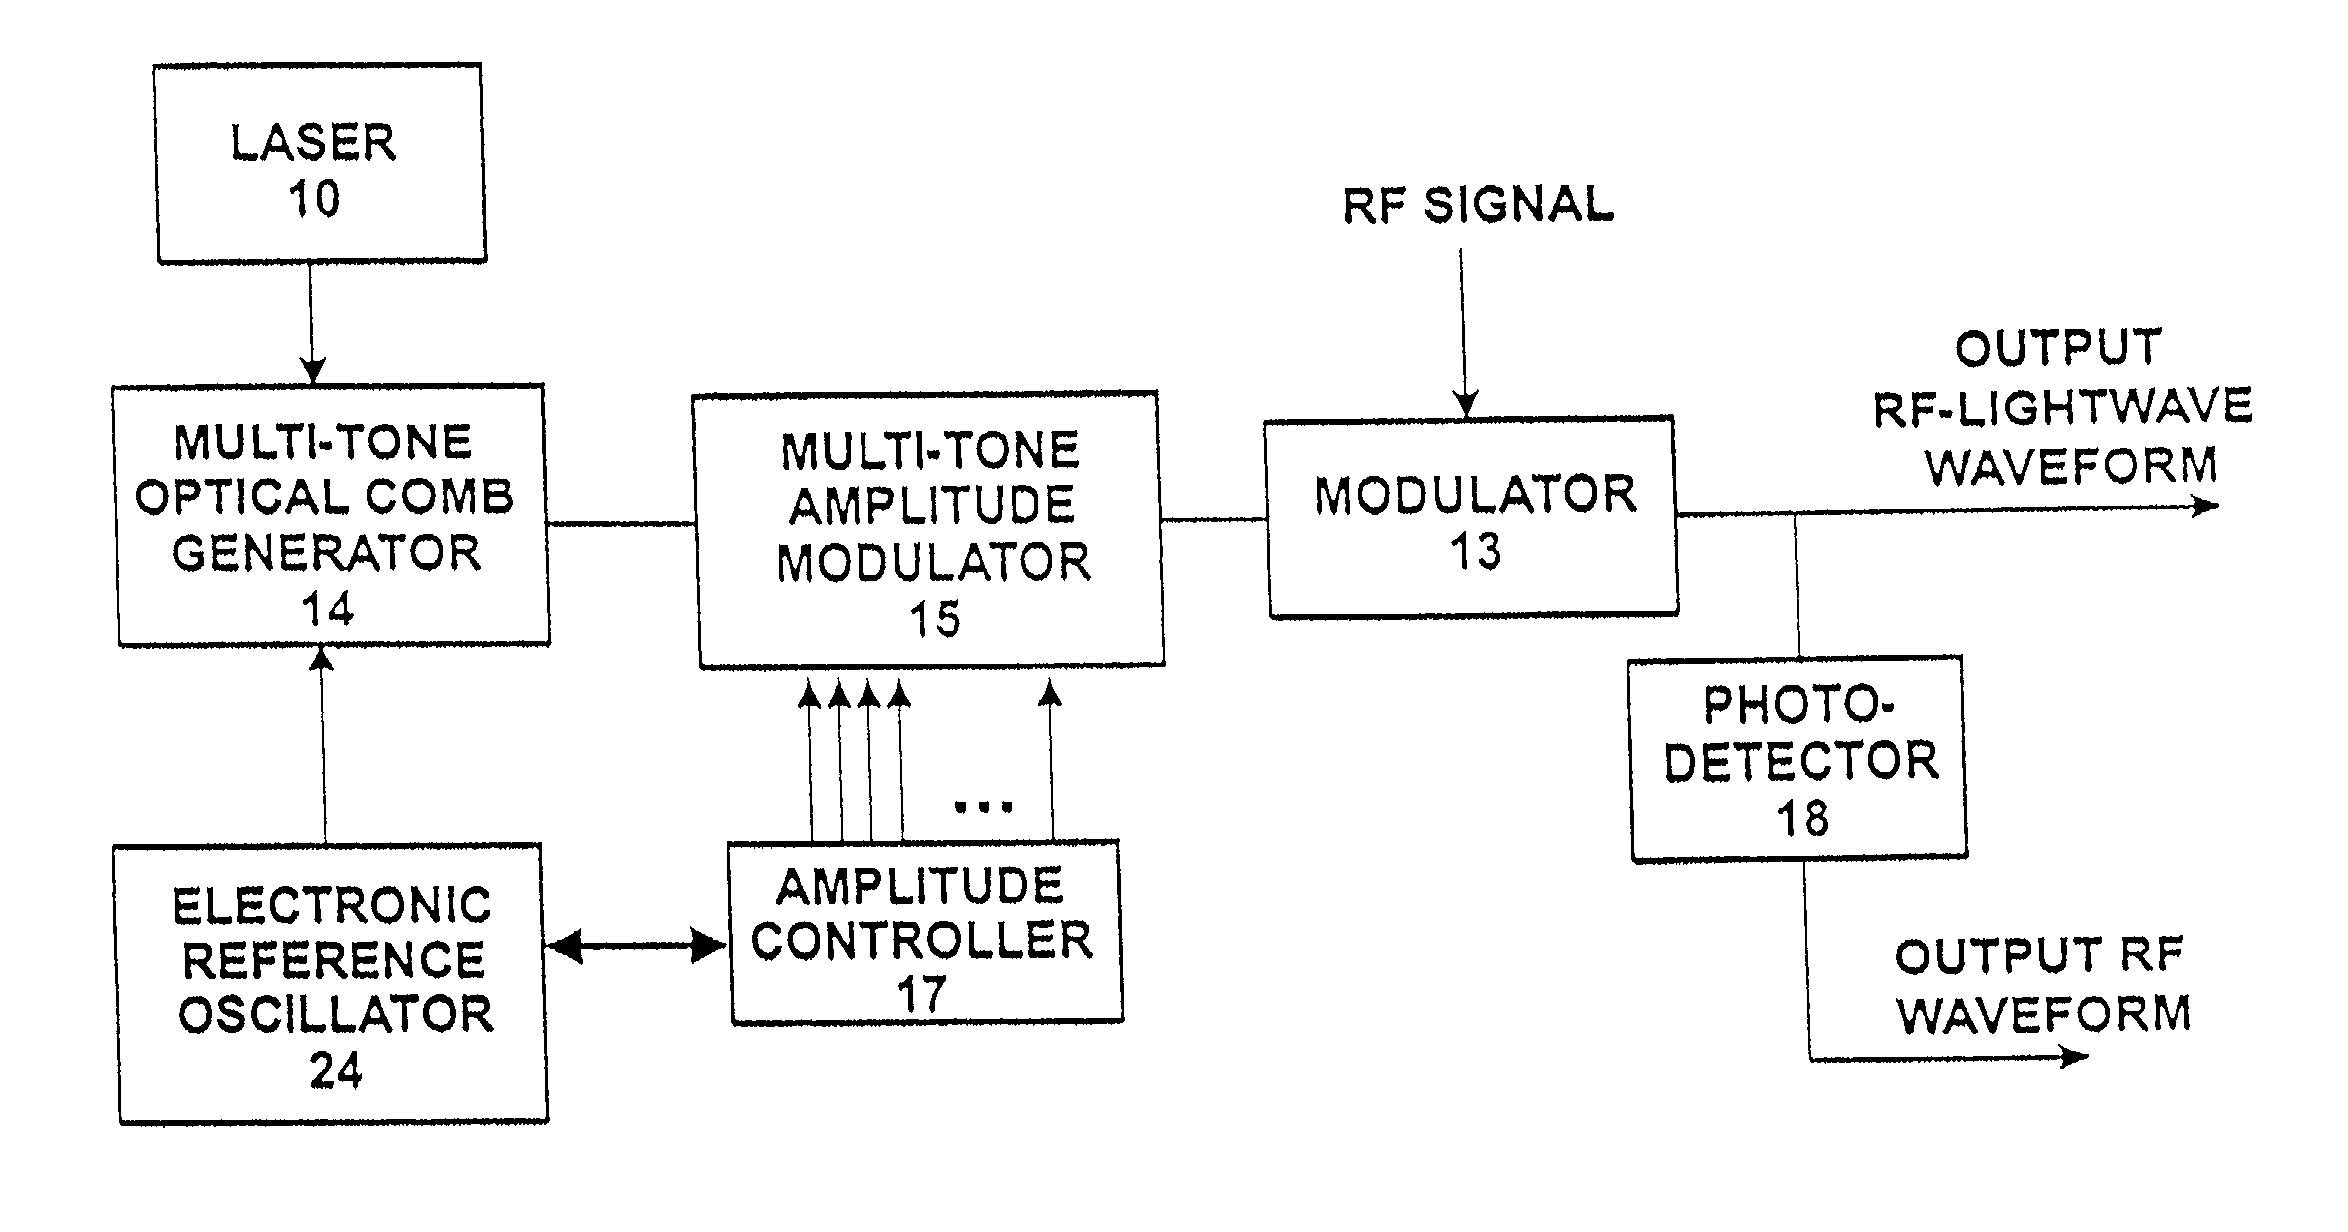 Agile RF-lightwave waveform synthesis and an optical multi-tone amplitude modulator